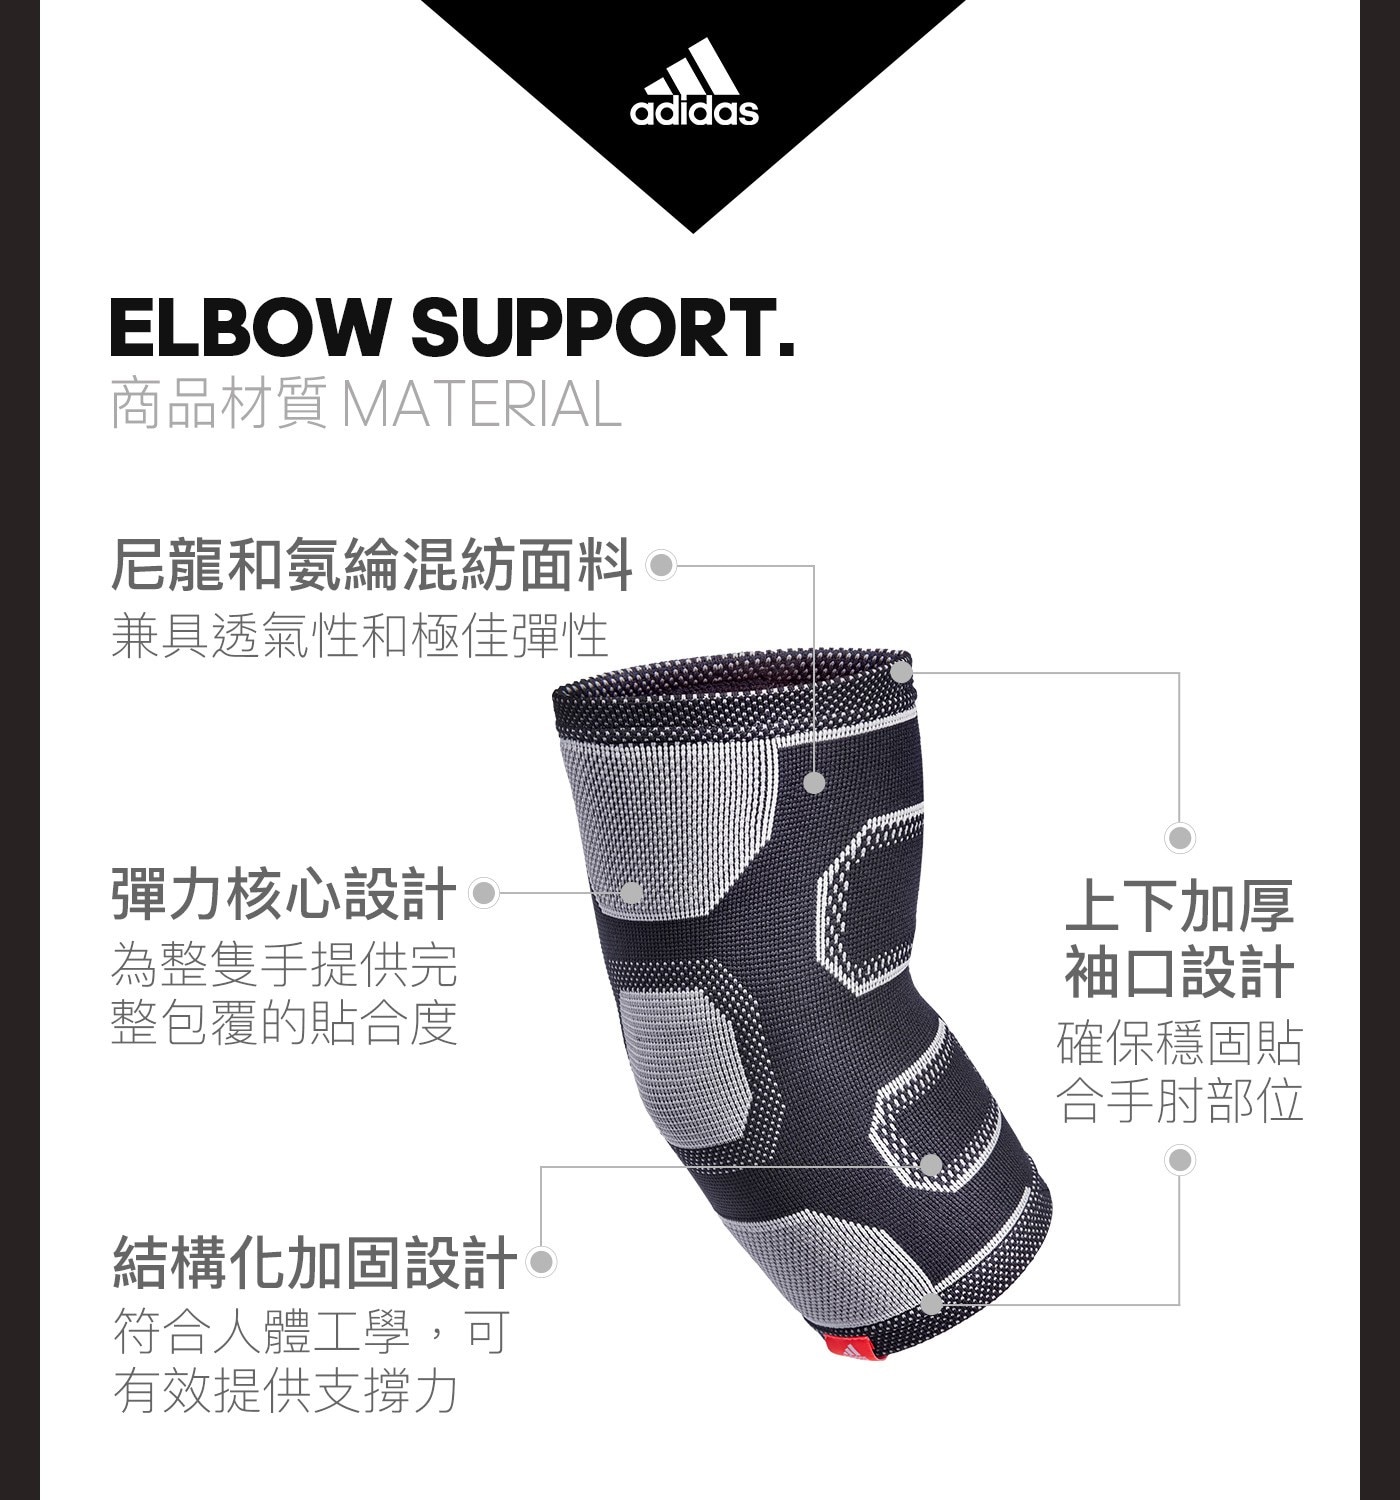 Adidas 肘關節用高性能護套 2入穩定減震頂部和底部均配有厚袖口設計可在訓練過程中保持穩定與支撐力有效緩解衝擊減低震動保護踝關節